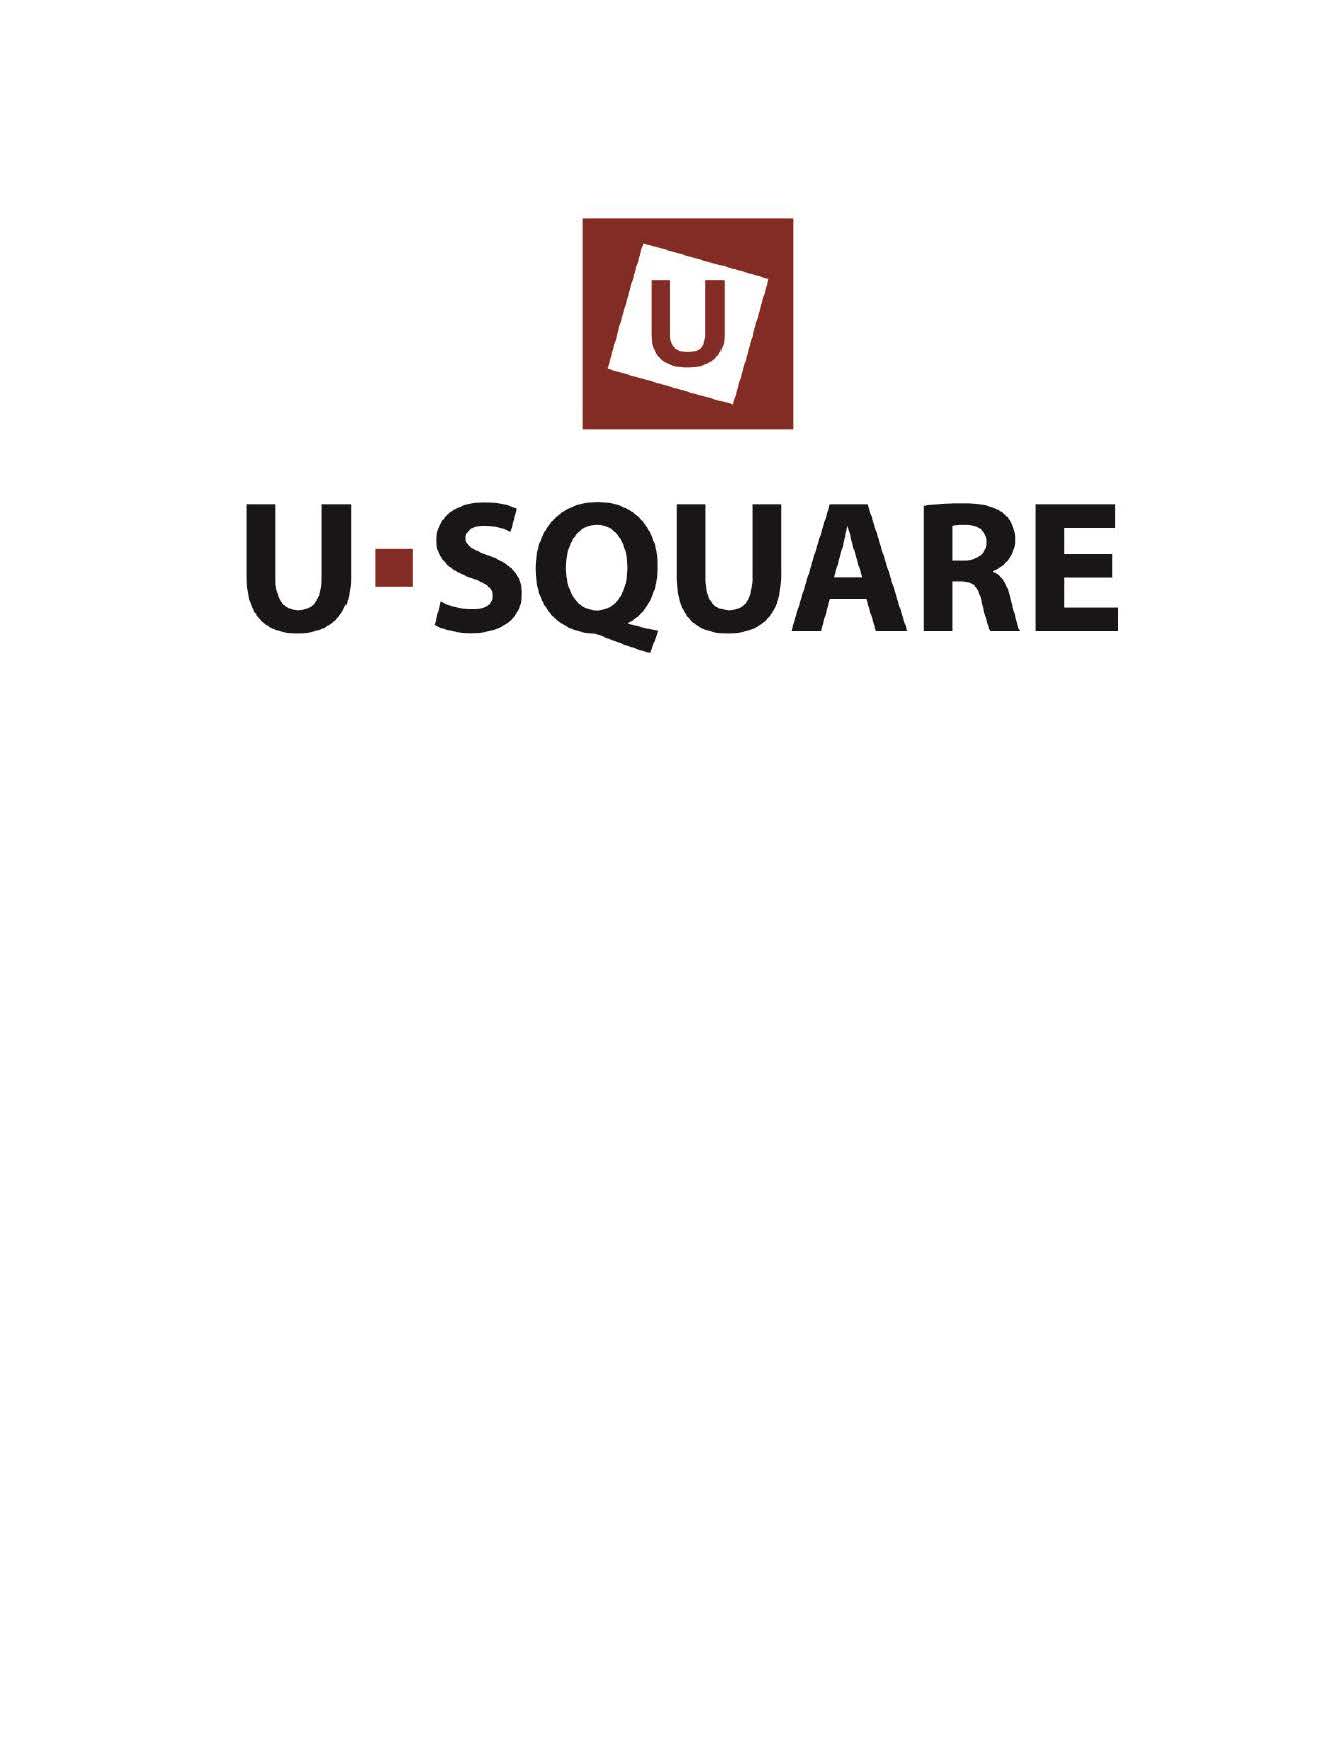 University Square Mall & Apartments